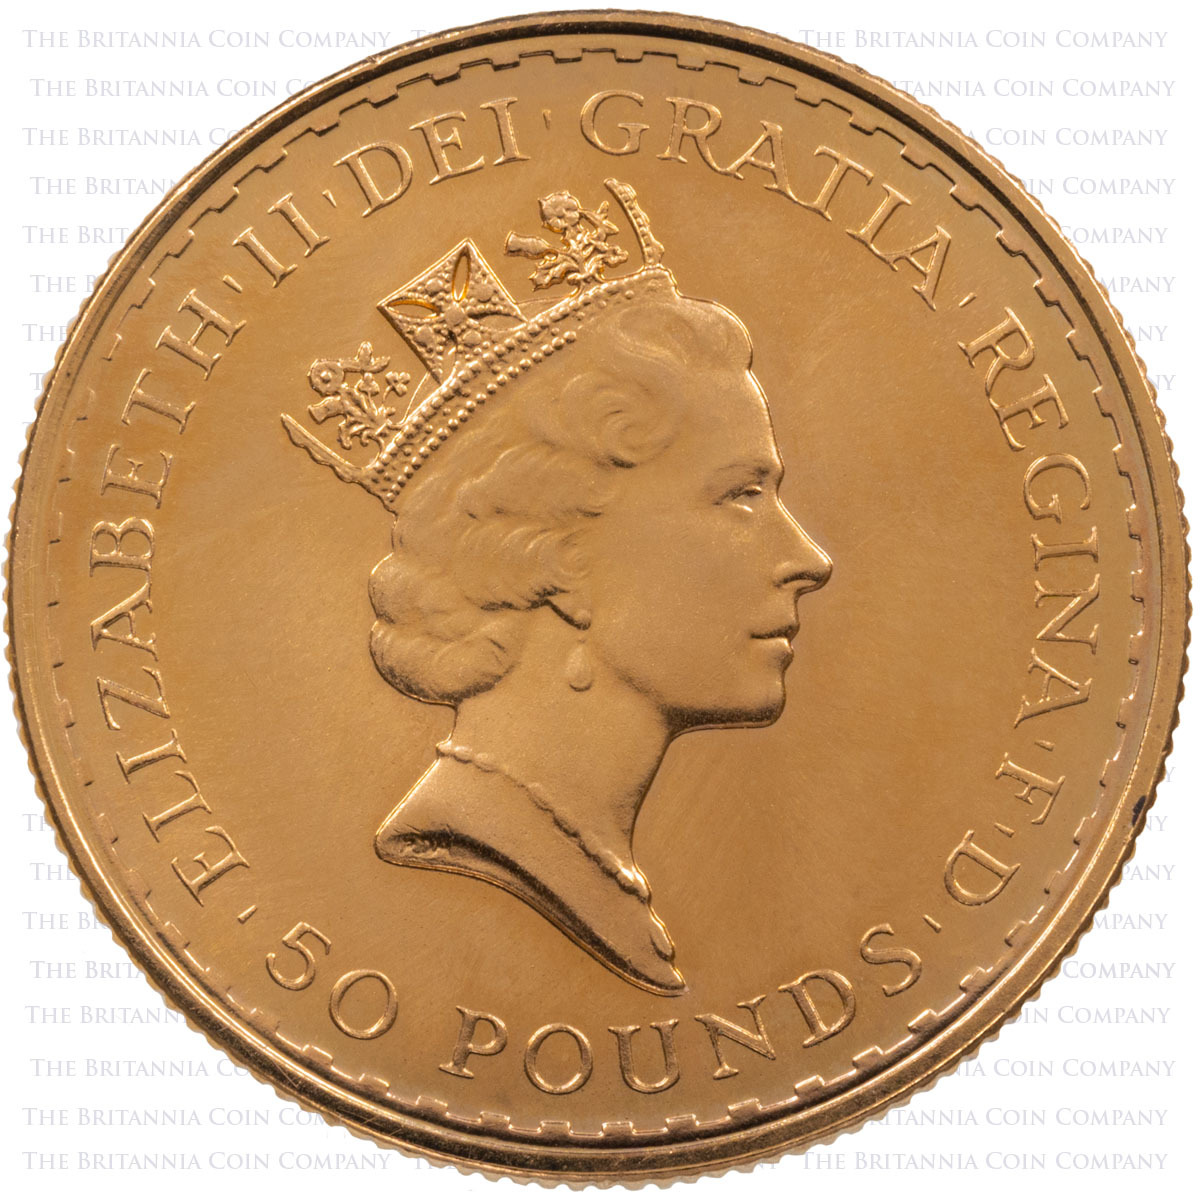 Half Ounce 22 Carat Gold Mixed-Date Britannia Bullion Coins (Best Value) Obverse